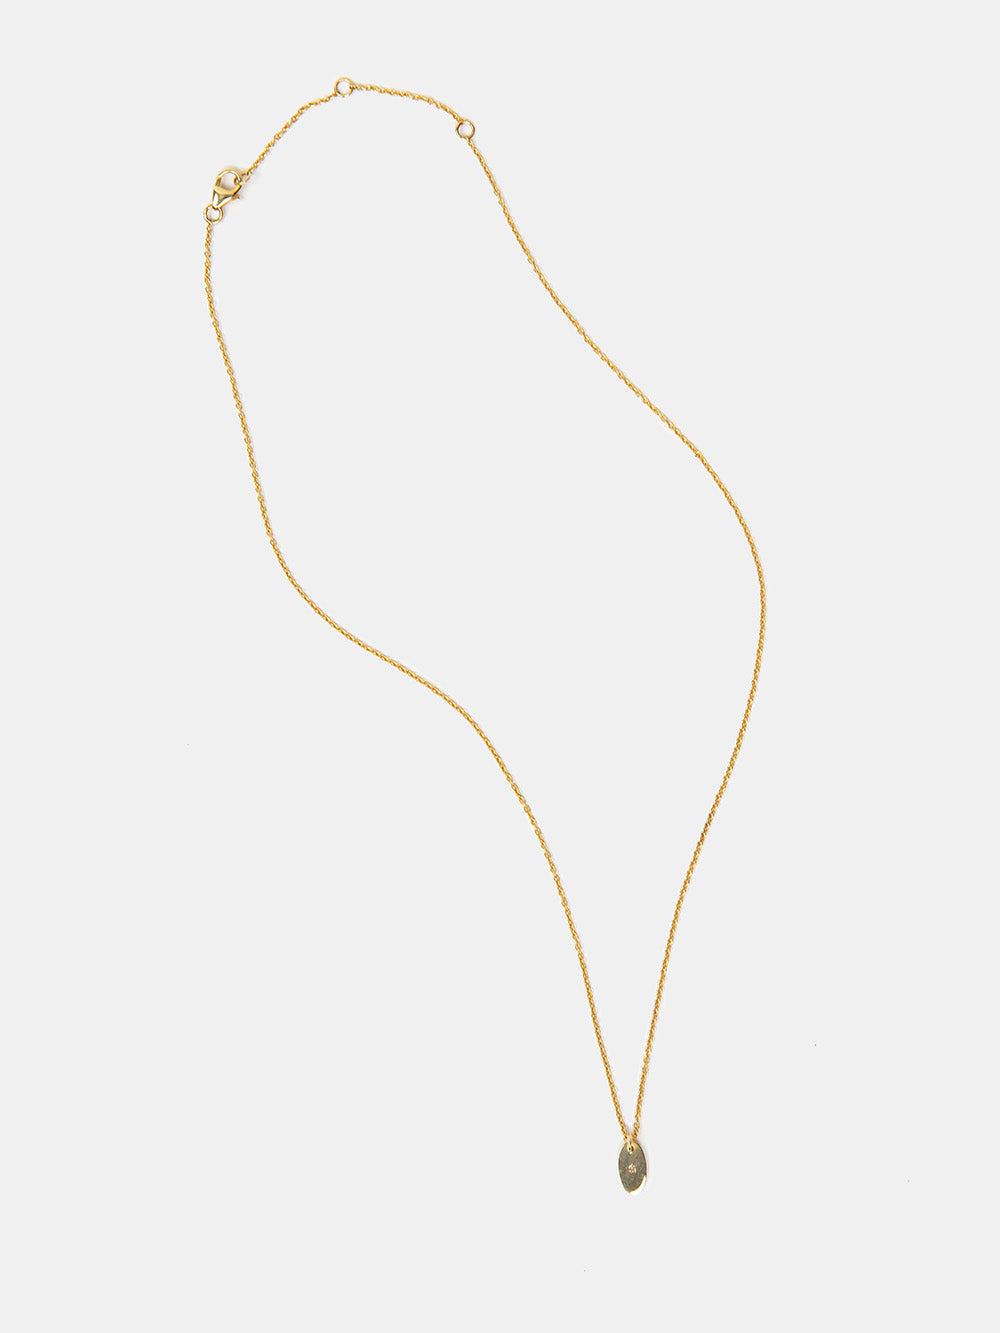 Ovum 14k Gold and Diamond Necklace